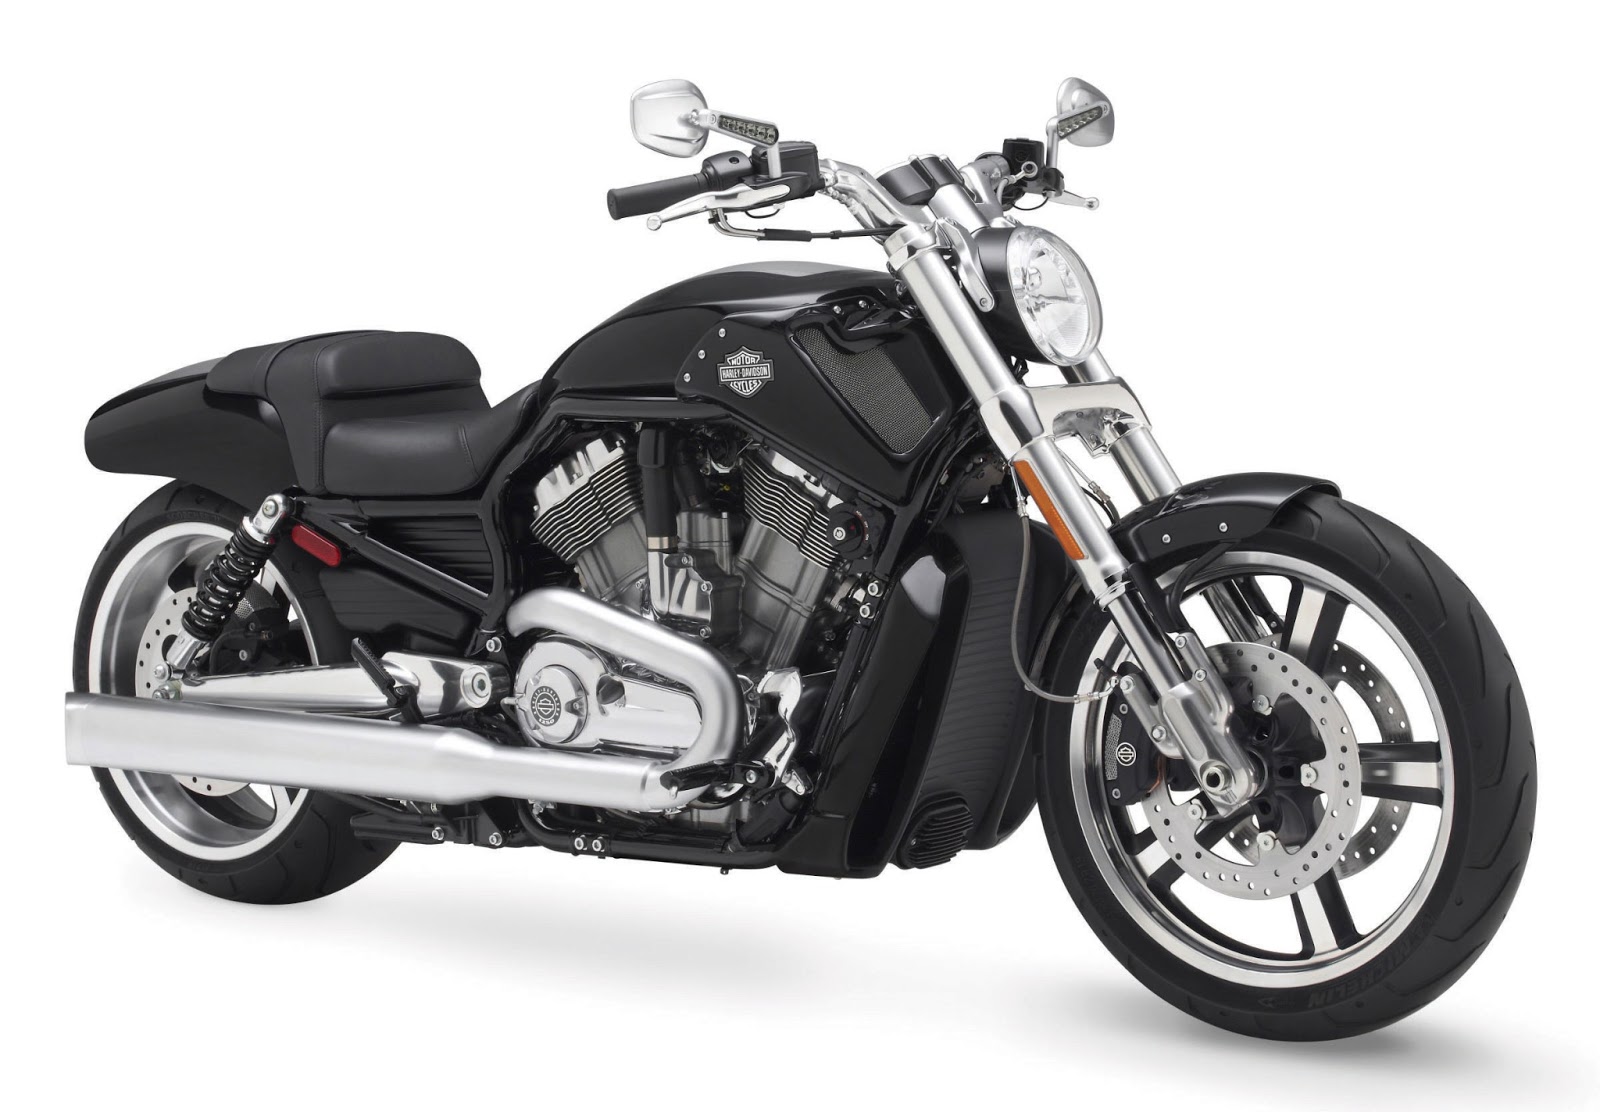 Harley-Davidson VRSCF V-Rod Muscle 1250cc photo - 1